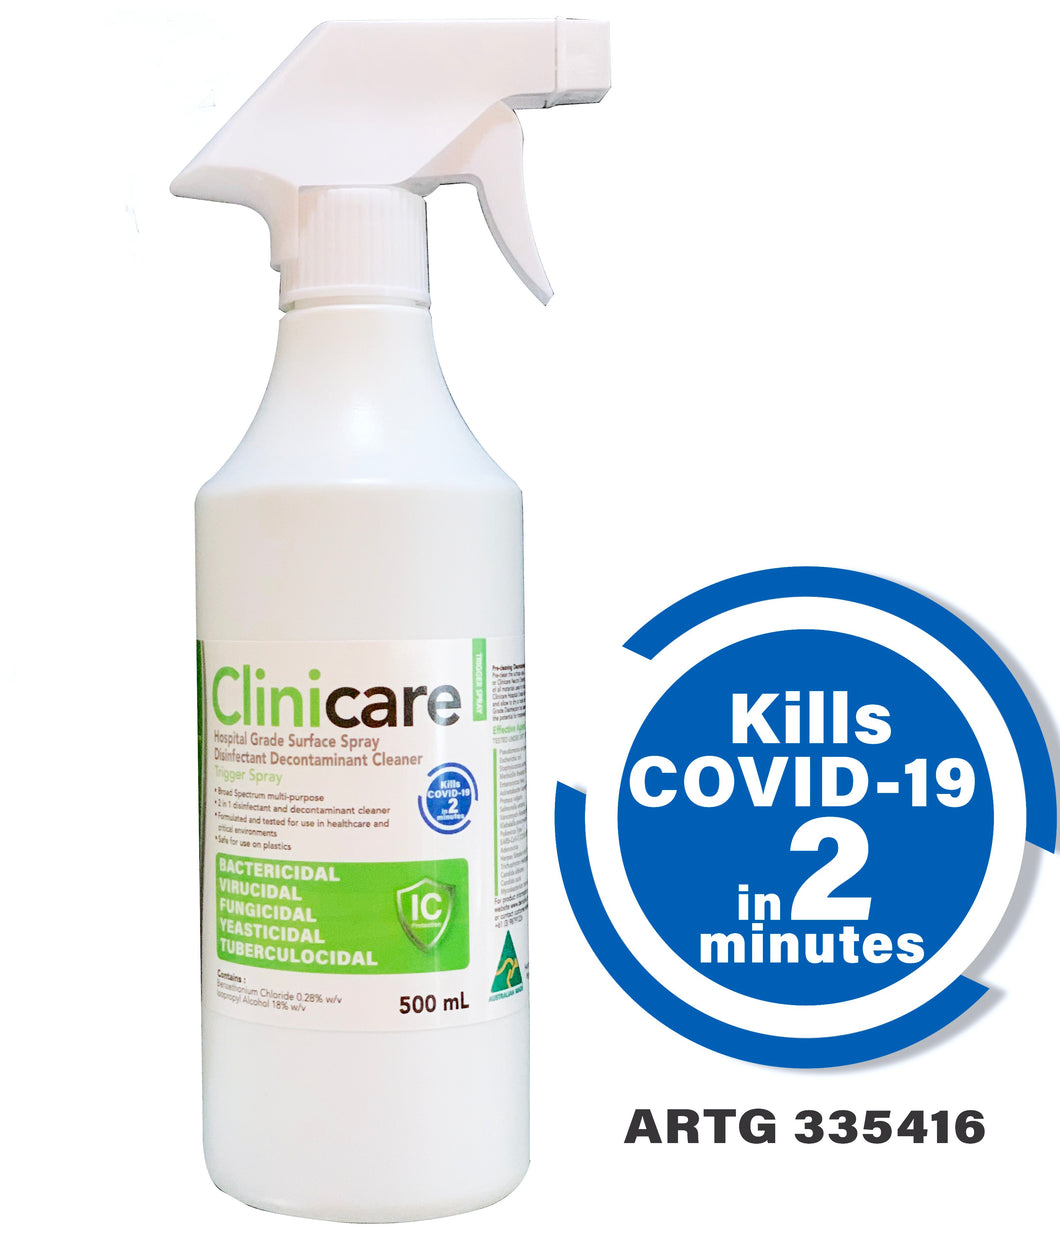 Clinicare Hospital Grade Disinfectant Surface Spray 500mL